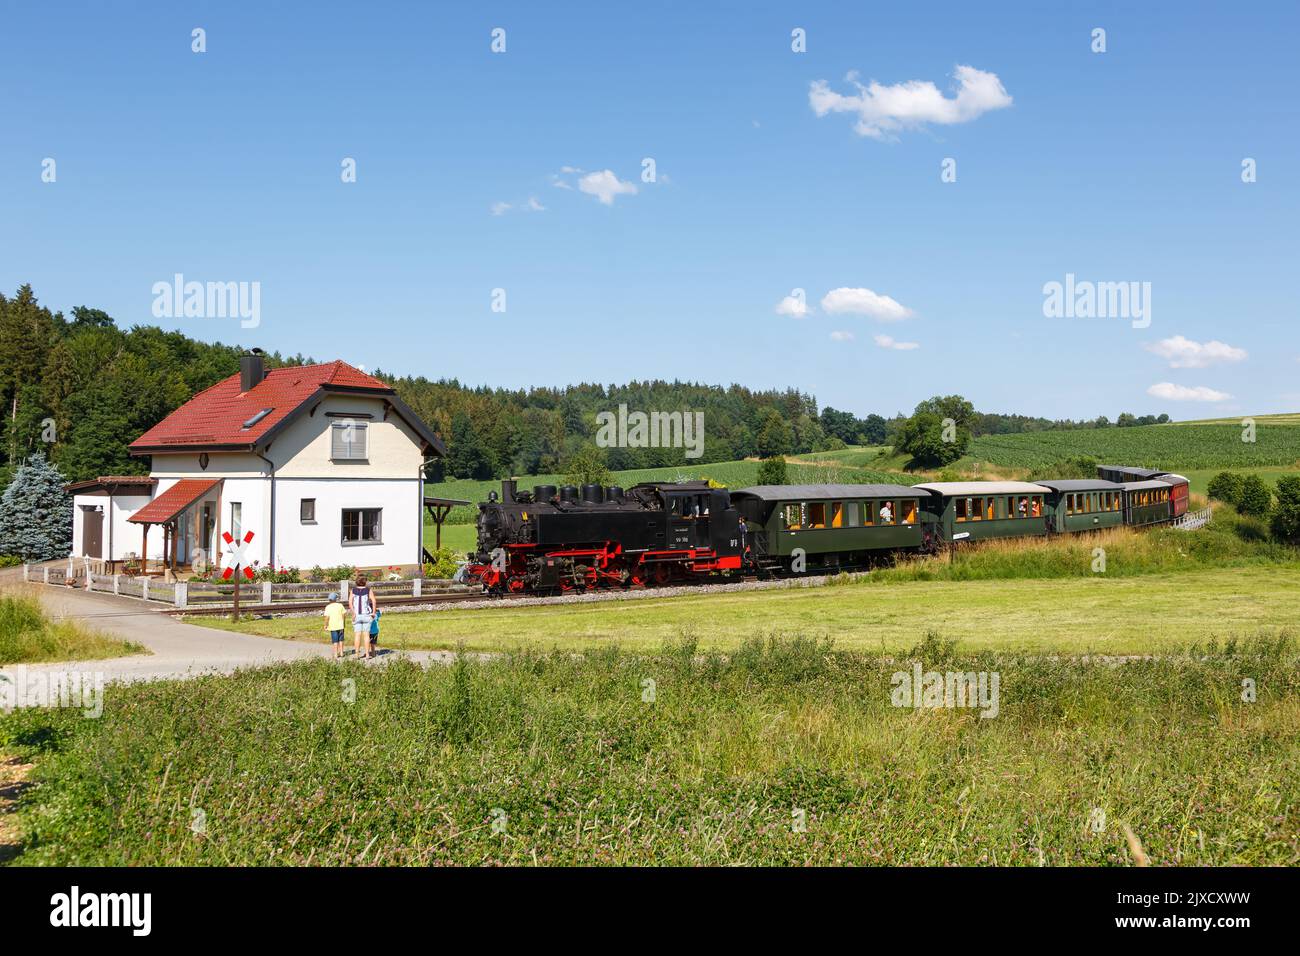 Tren de vapor Öchsle ferrocarril de locomotoras en Ochsenhausen Wennedach, Alemania Foto de stock